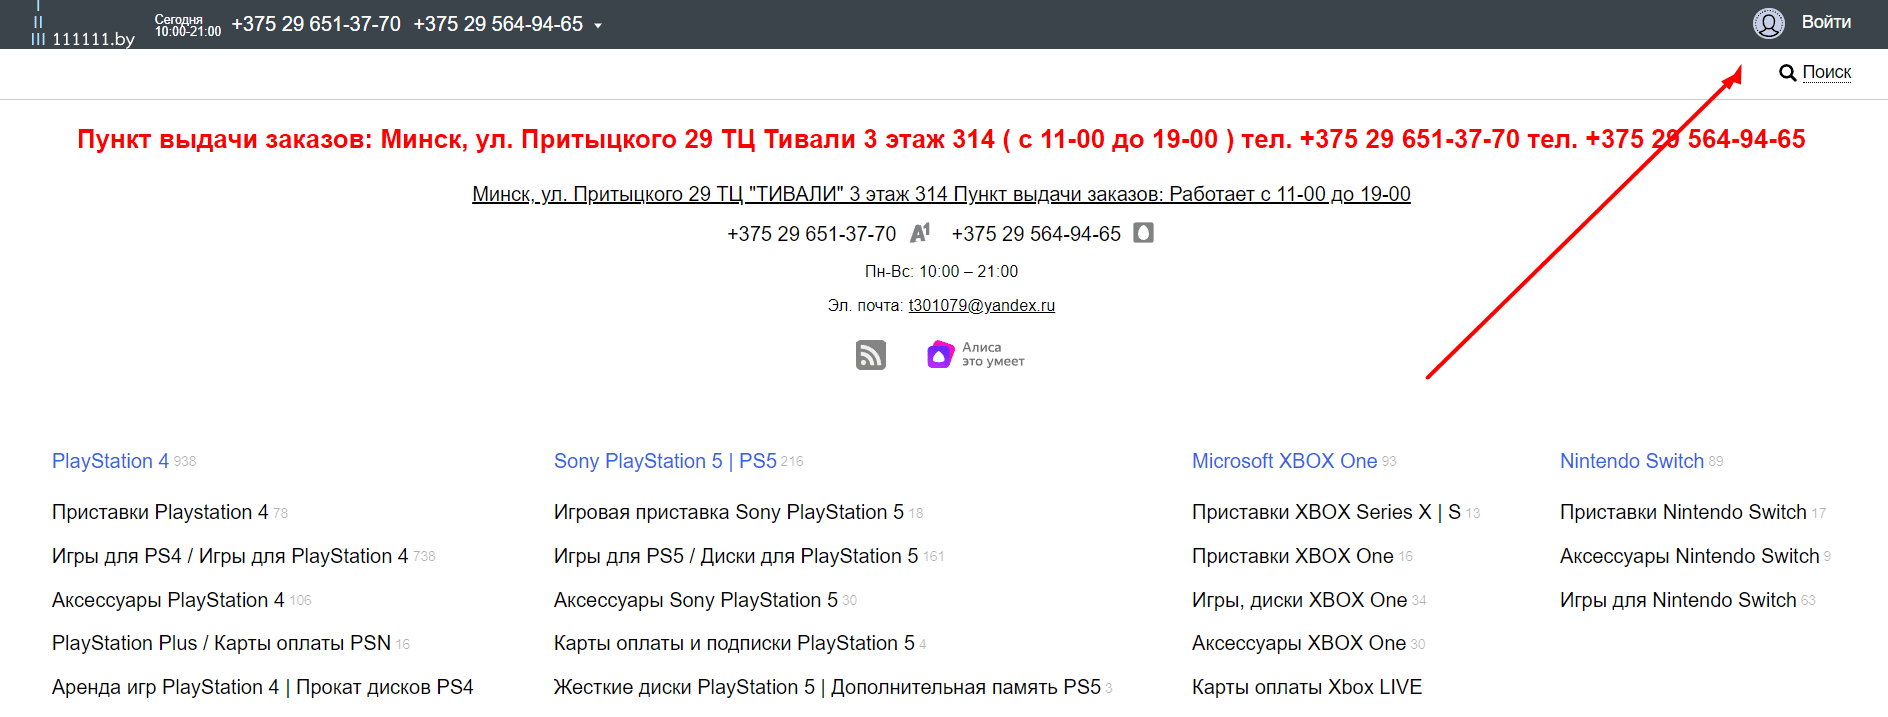 Интернет-магазин (111111.by)